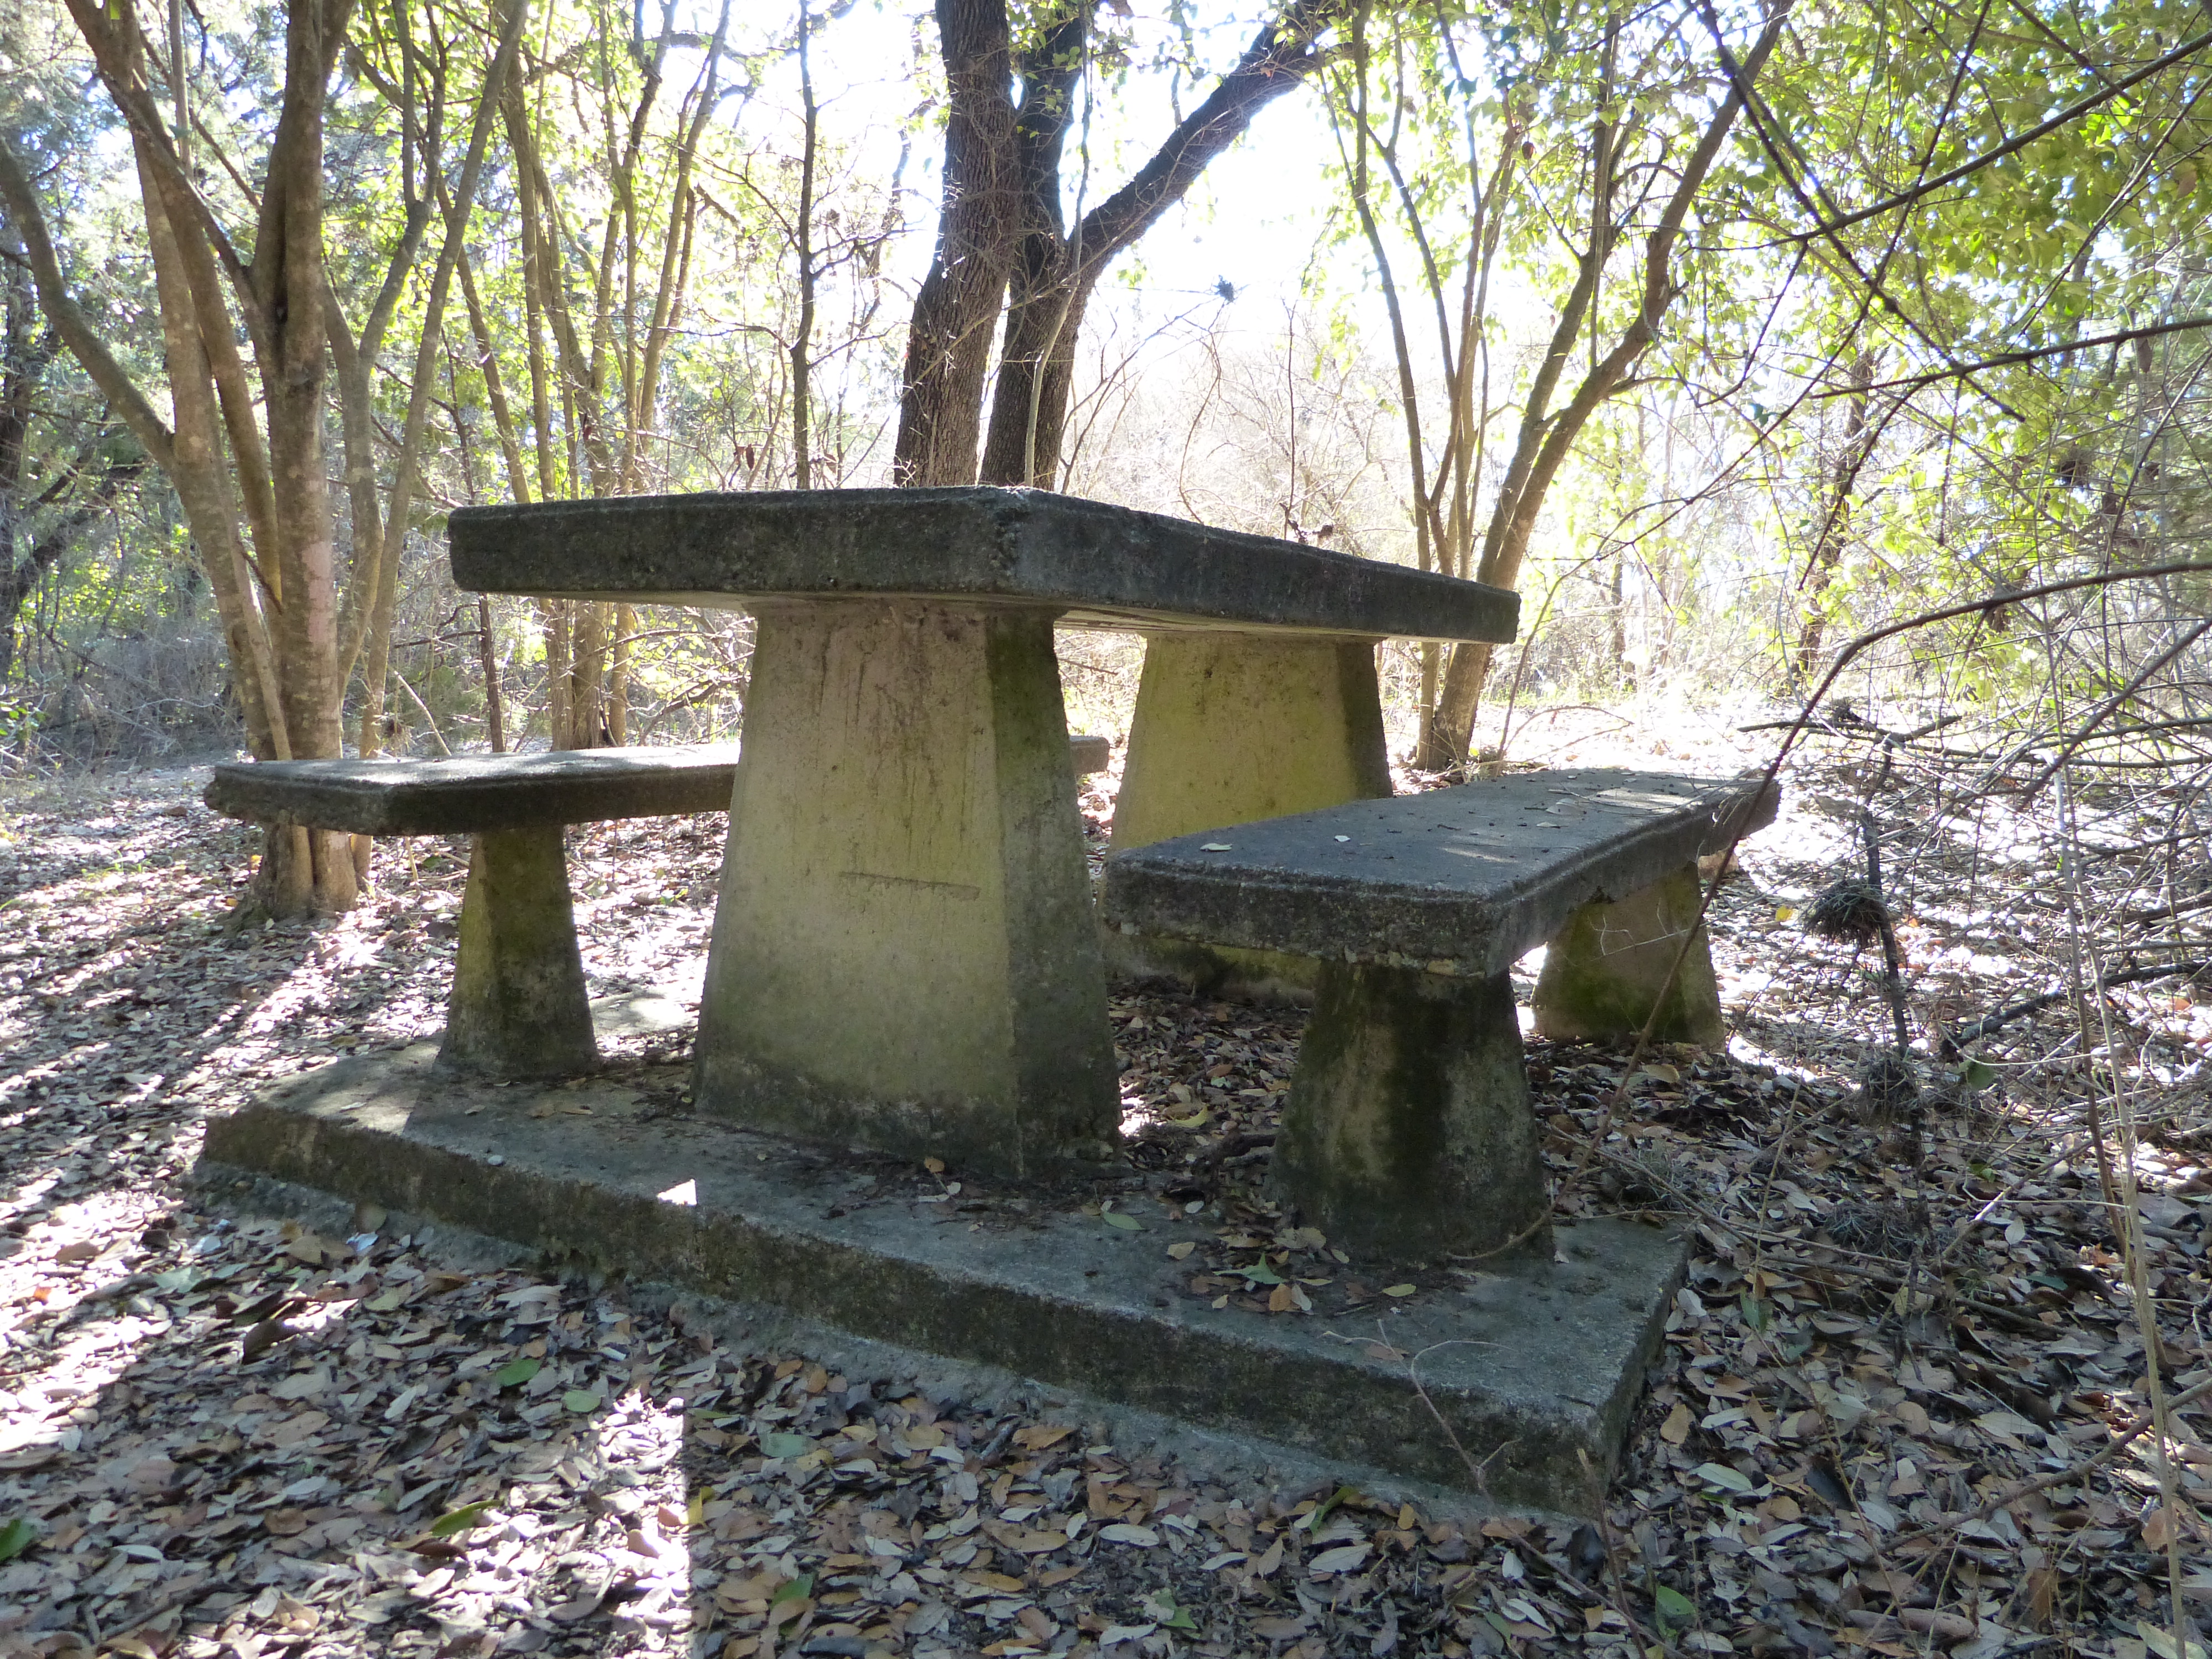 Close up of a CCC-era picnic table at Zilker Park